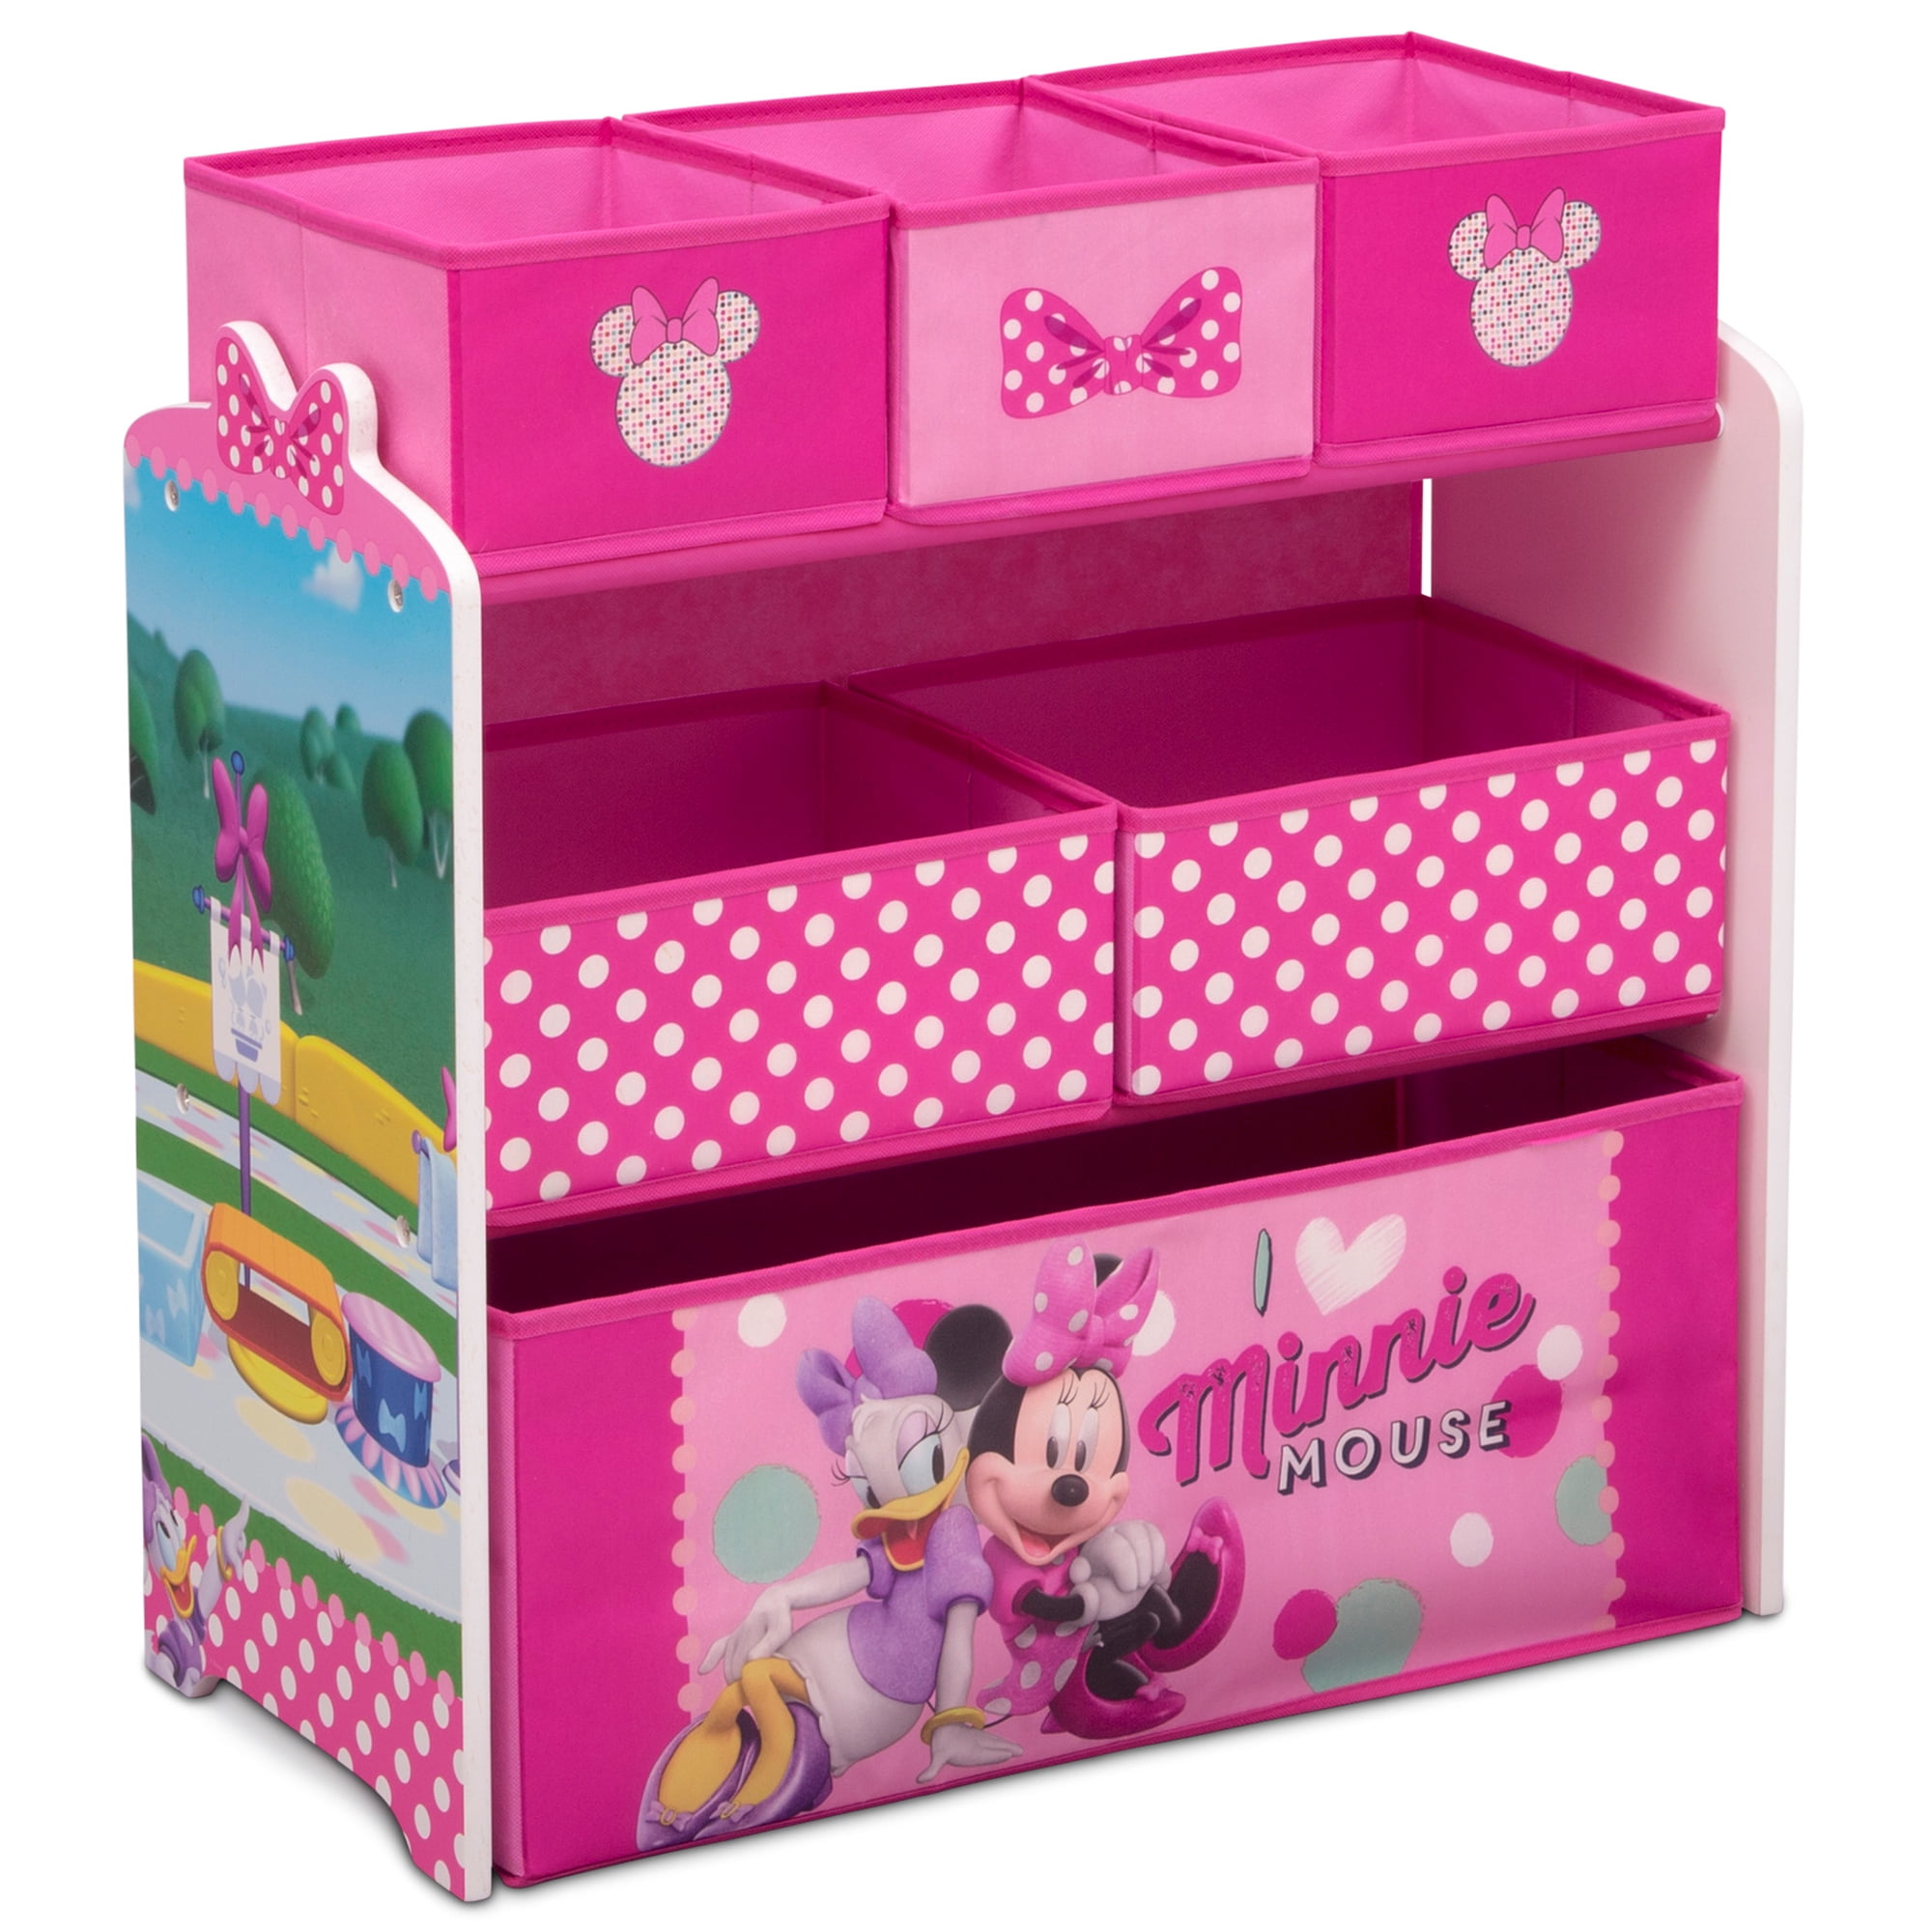 Details about   Princess Kids Girls Playroom Multi Bin Toy Organizer Storage Box Chest  Pink 